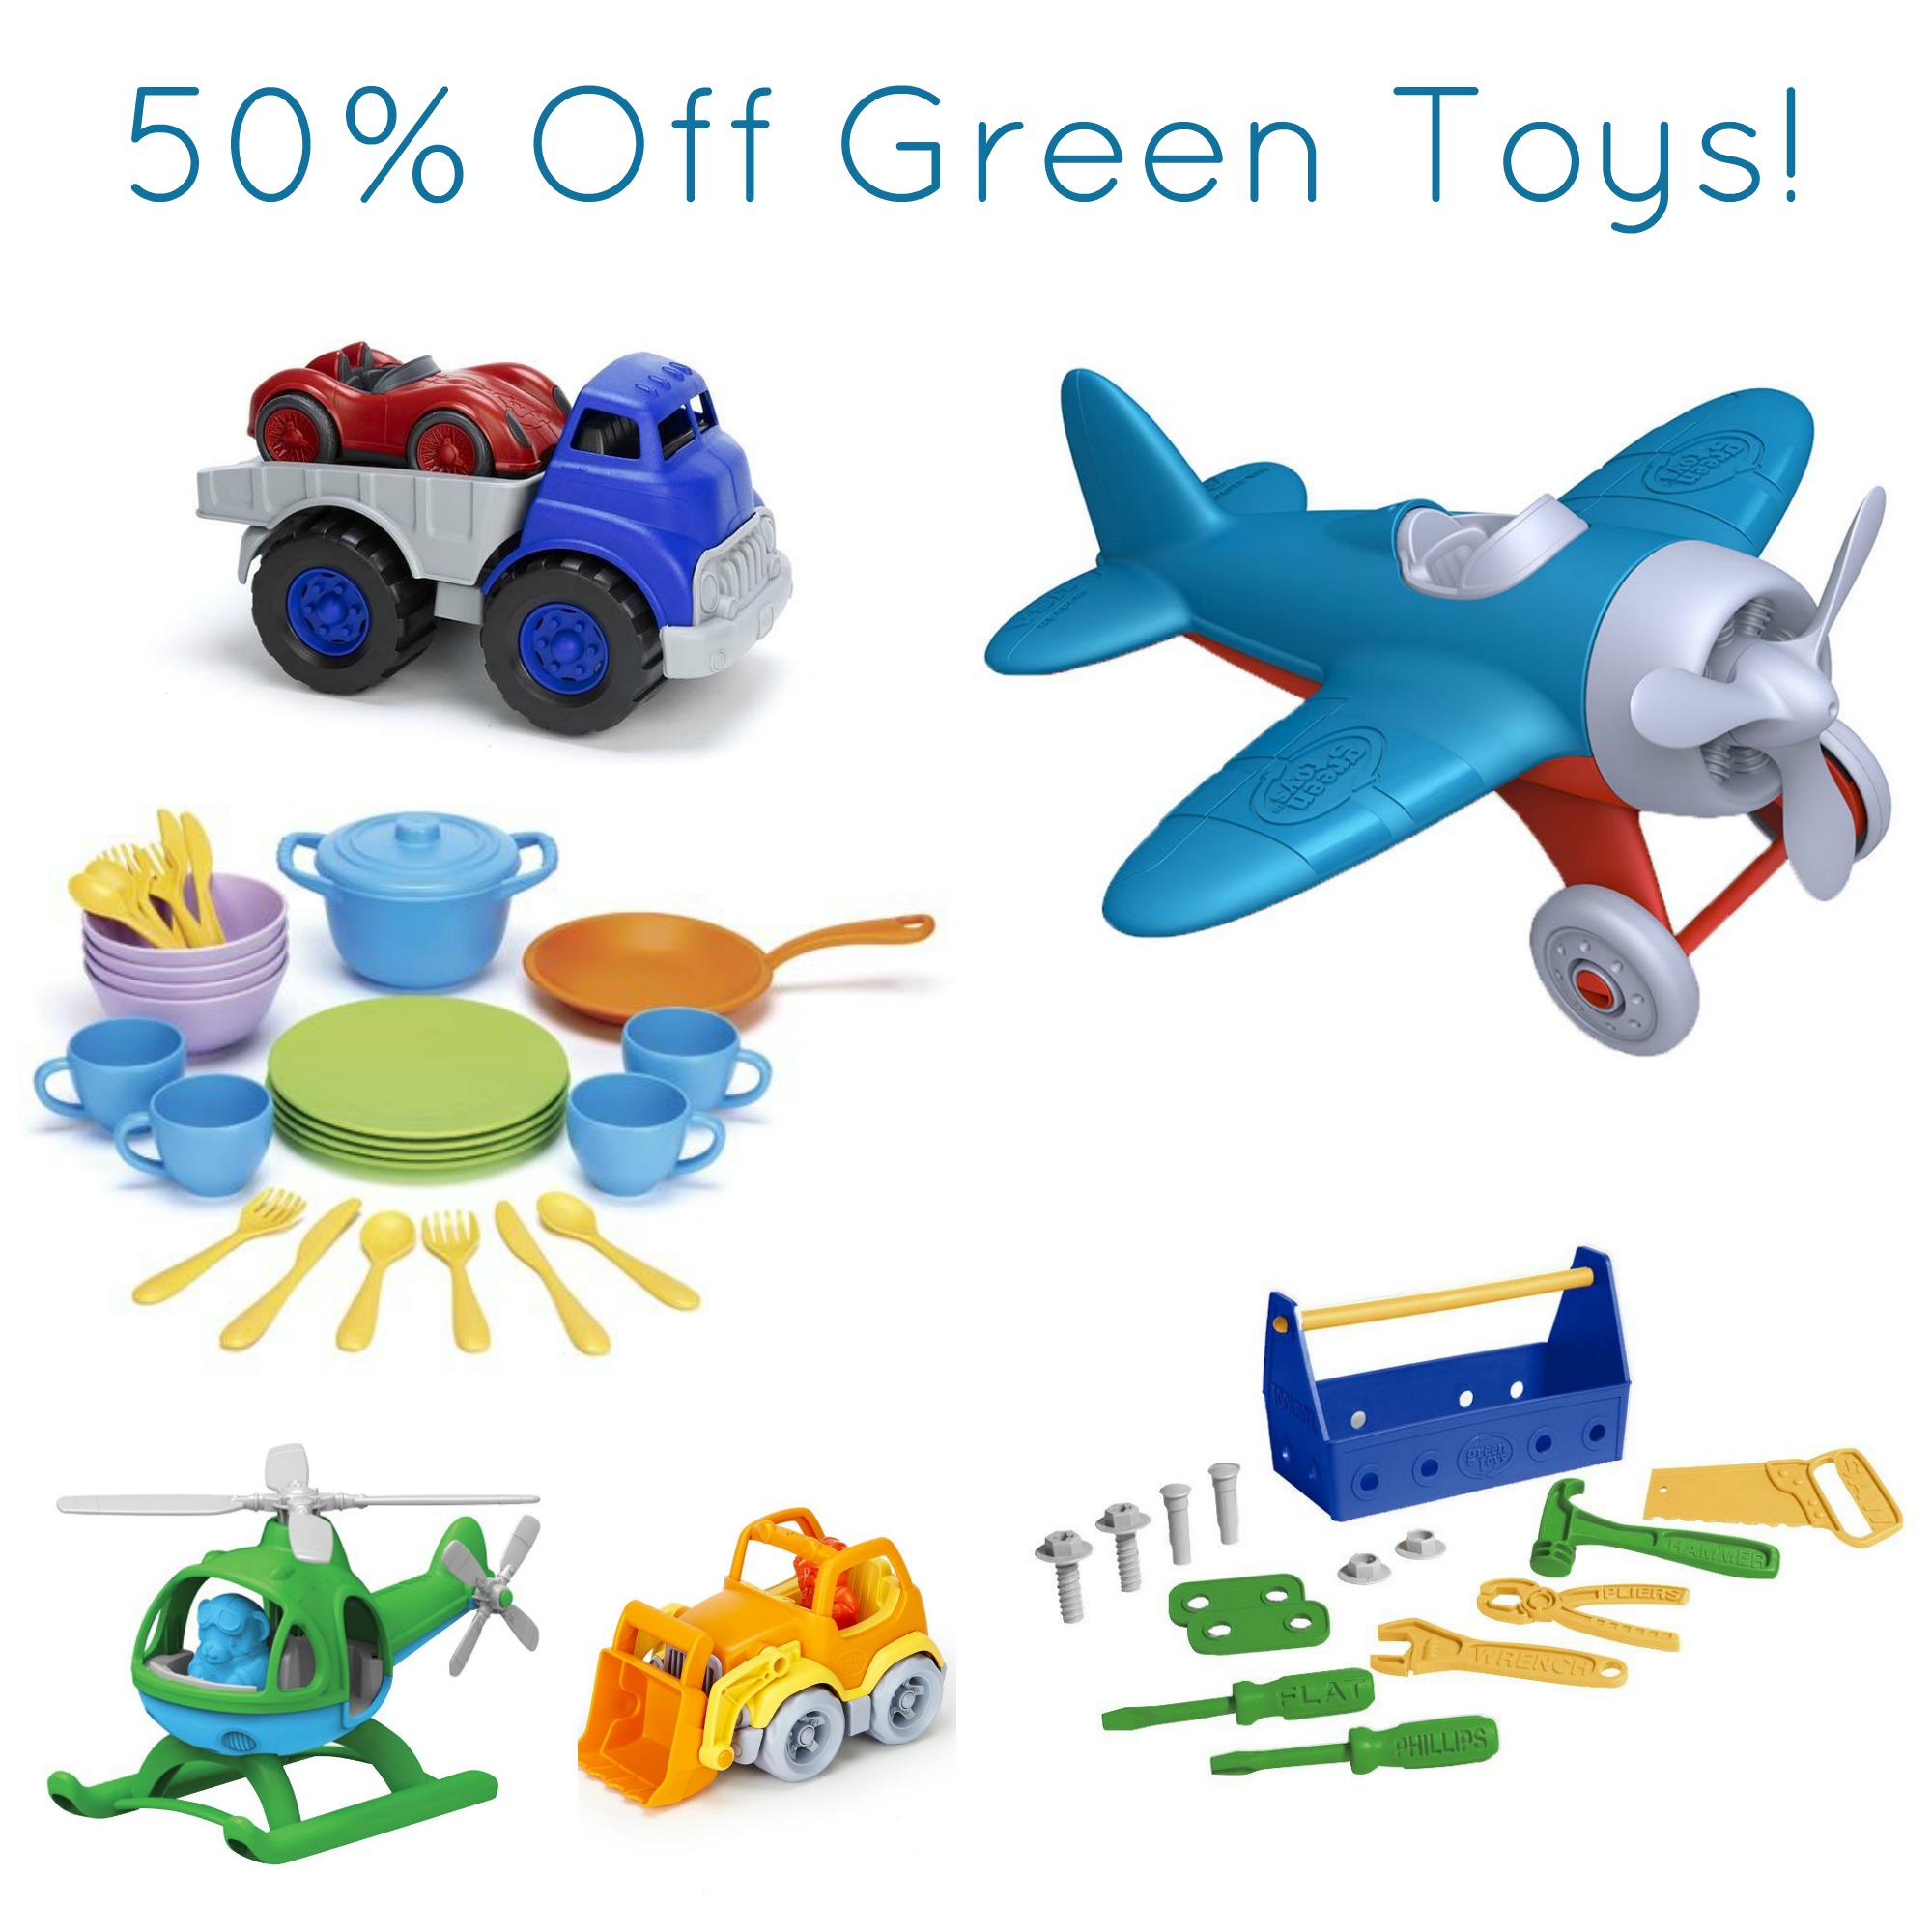 Green Toys 50% Off on Amazon